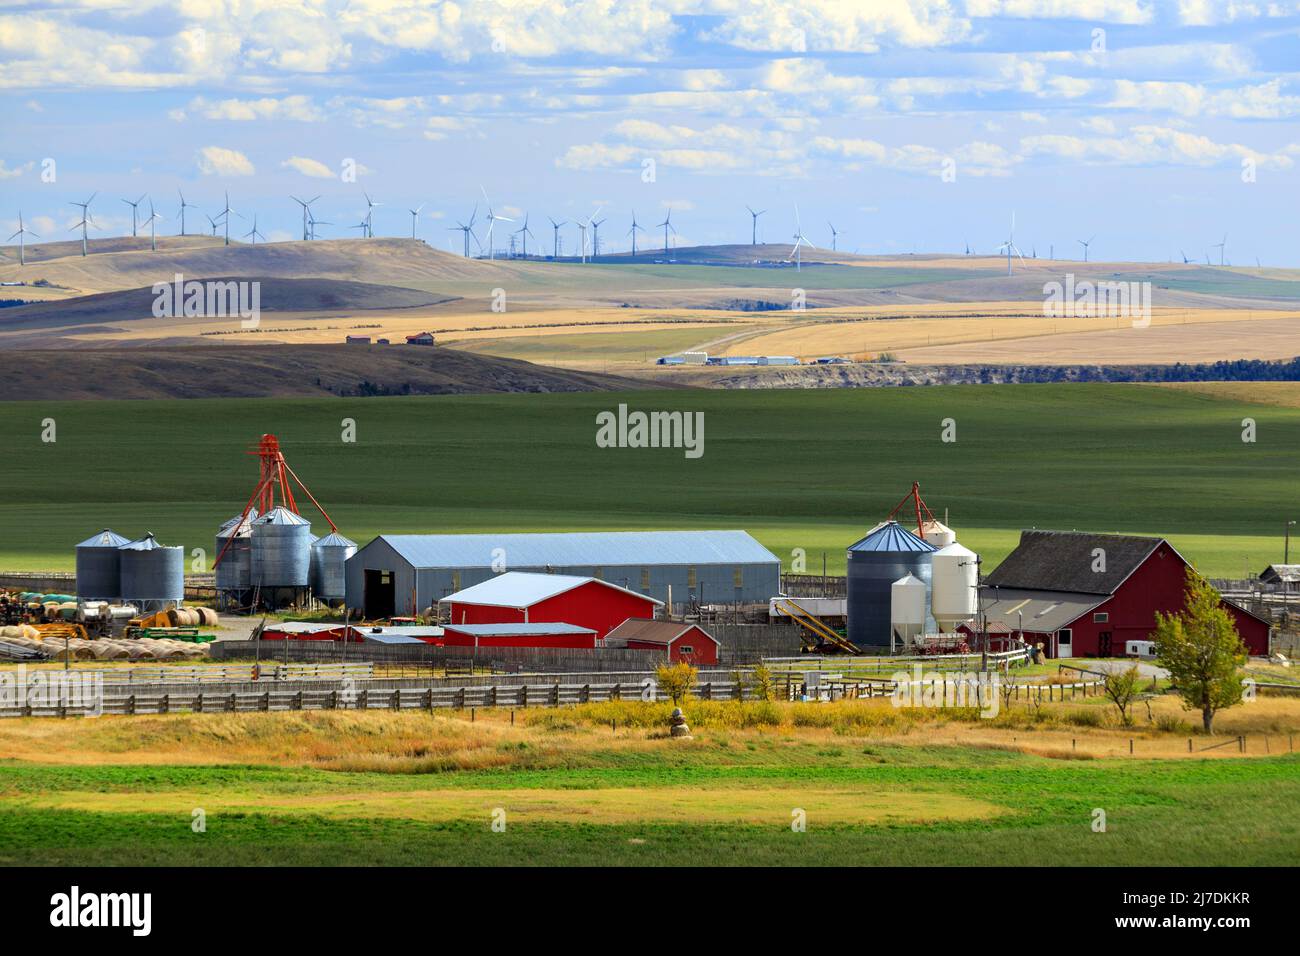 A farm and farmland agricultural landscape in the Canadian prairies near Lundbreck, Alberta, Canada. Stock Photo